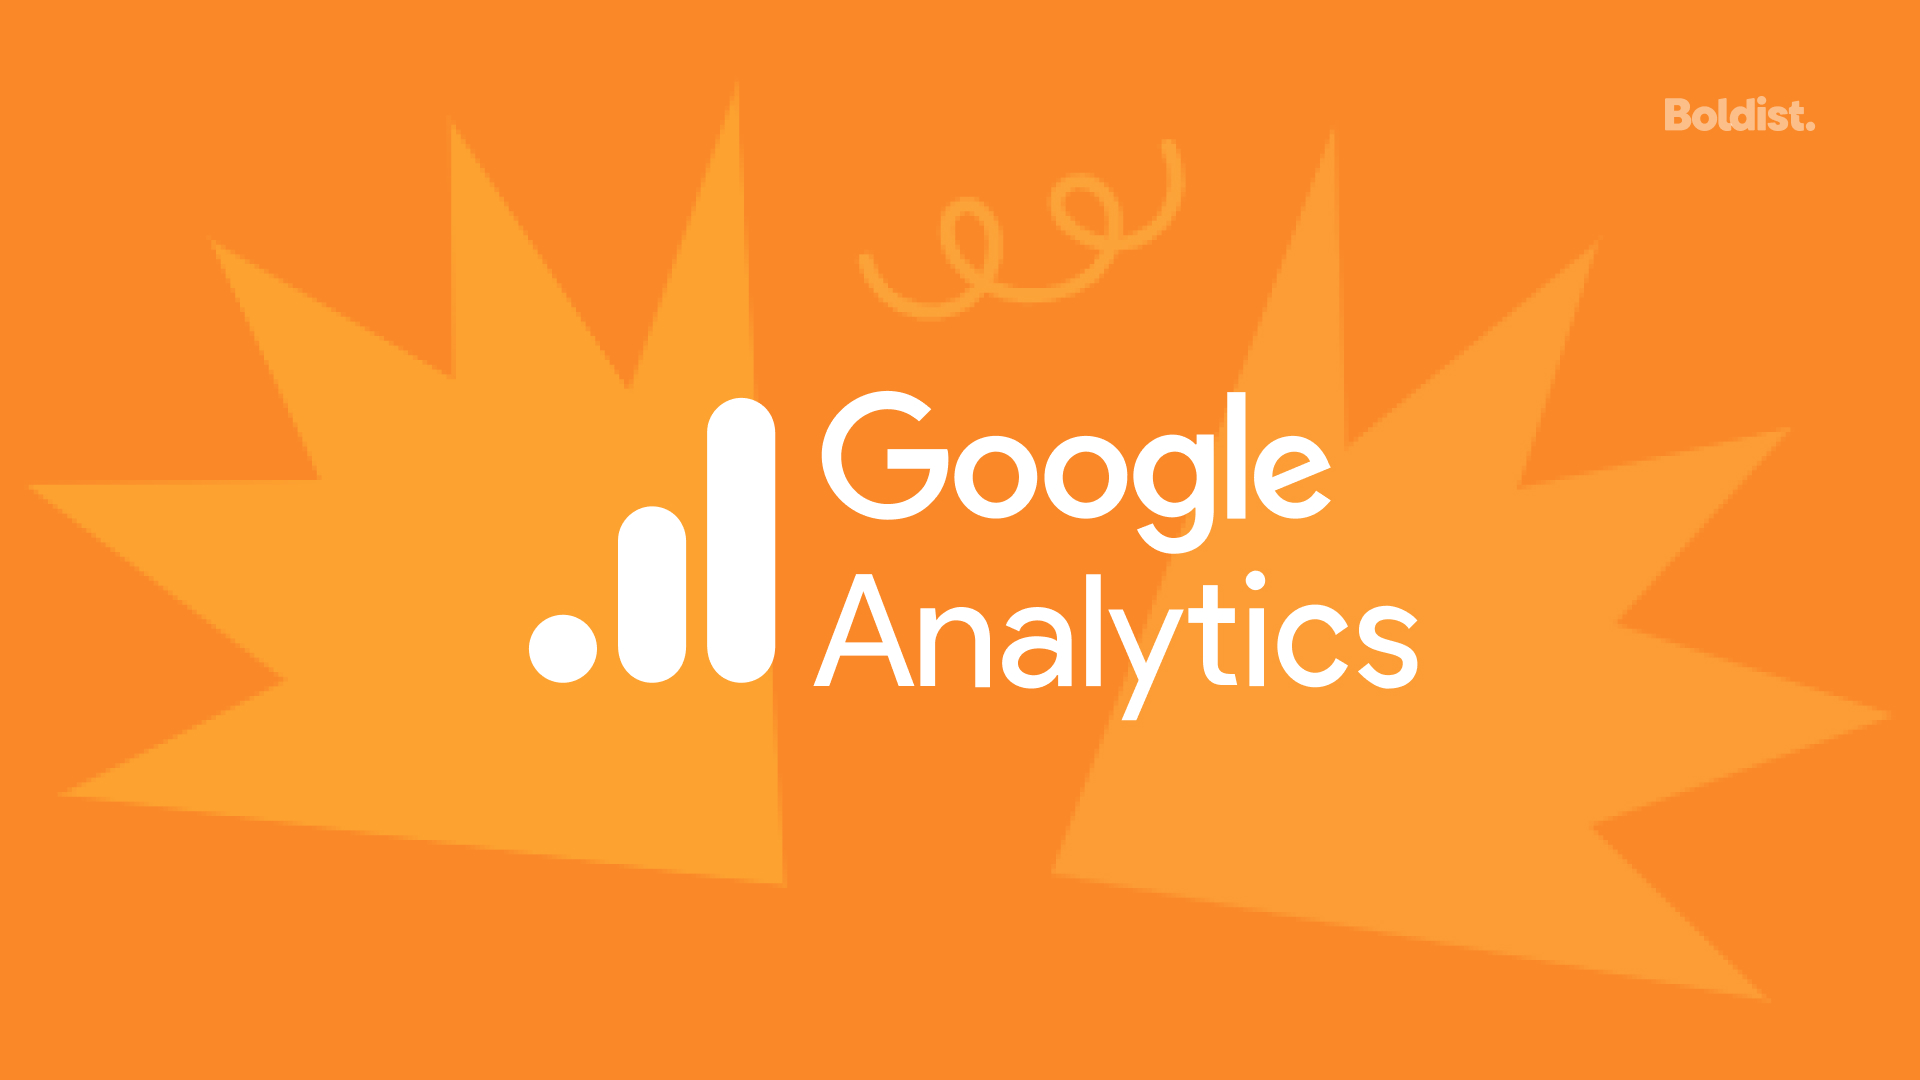 Boldist - Introducing the New Google Analytics 4